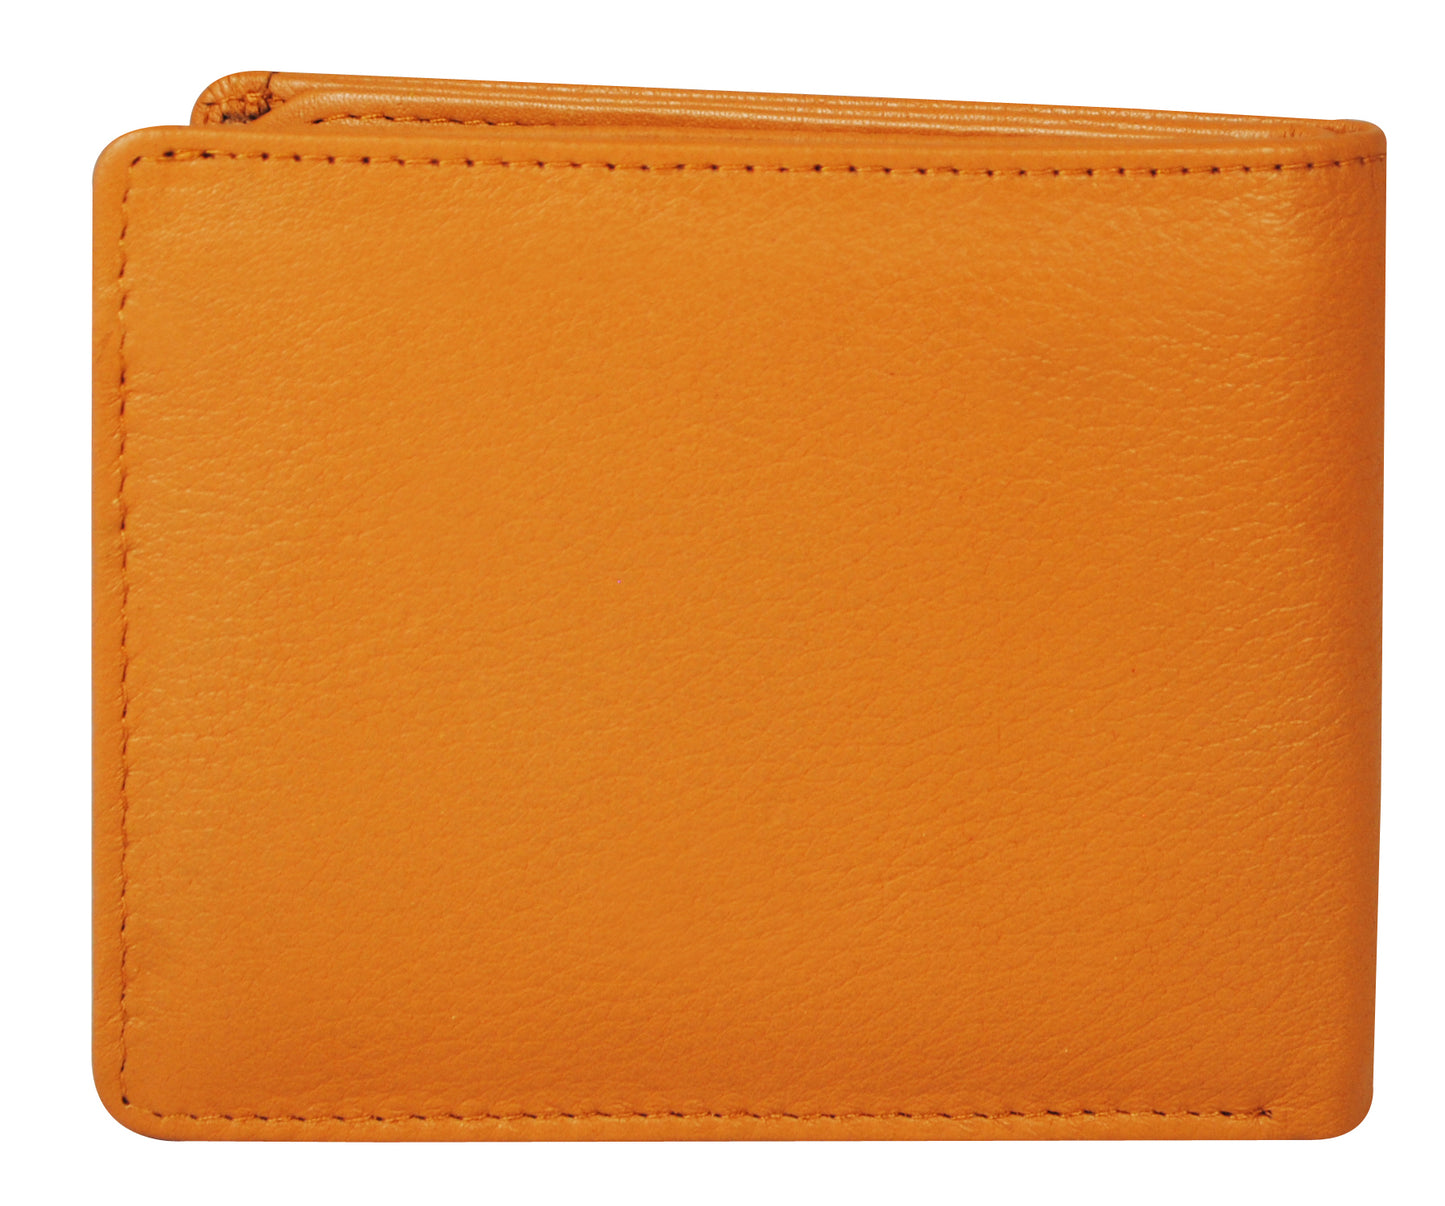 Calfnero Genuine Leather Men's Wallet (756-Brown)